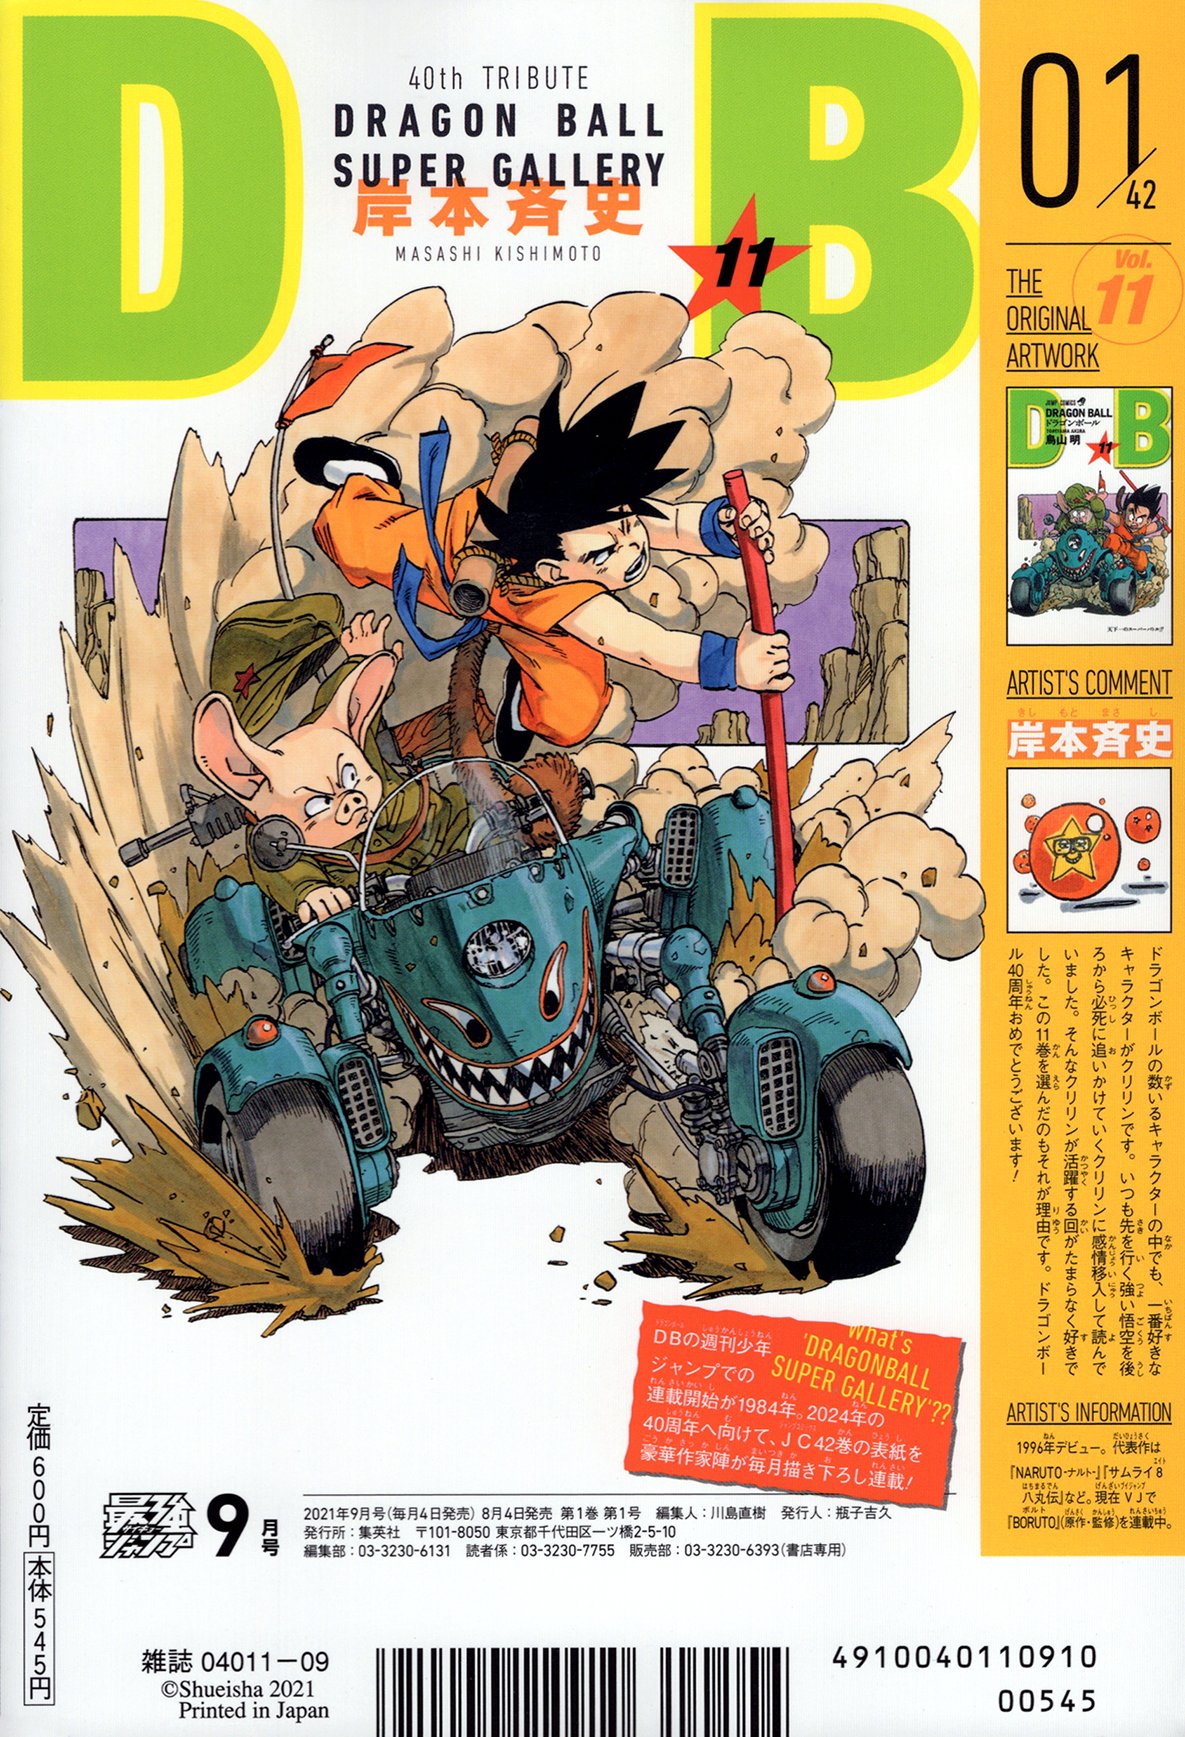 Dragon Ball Super: Dragon Ball Super, Vol. 4 (Series #4) (Paperback) 